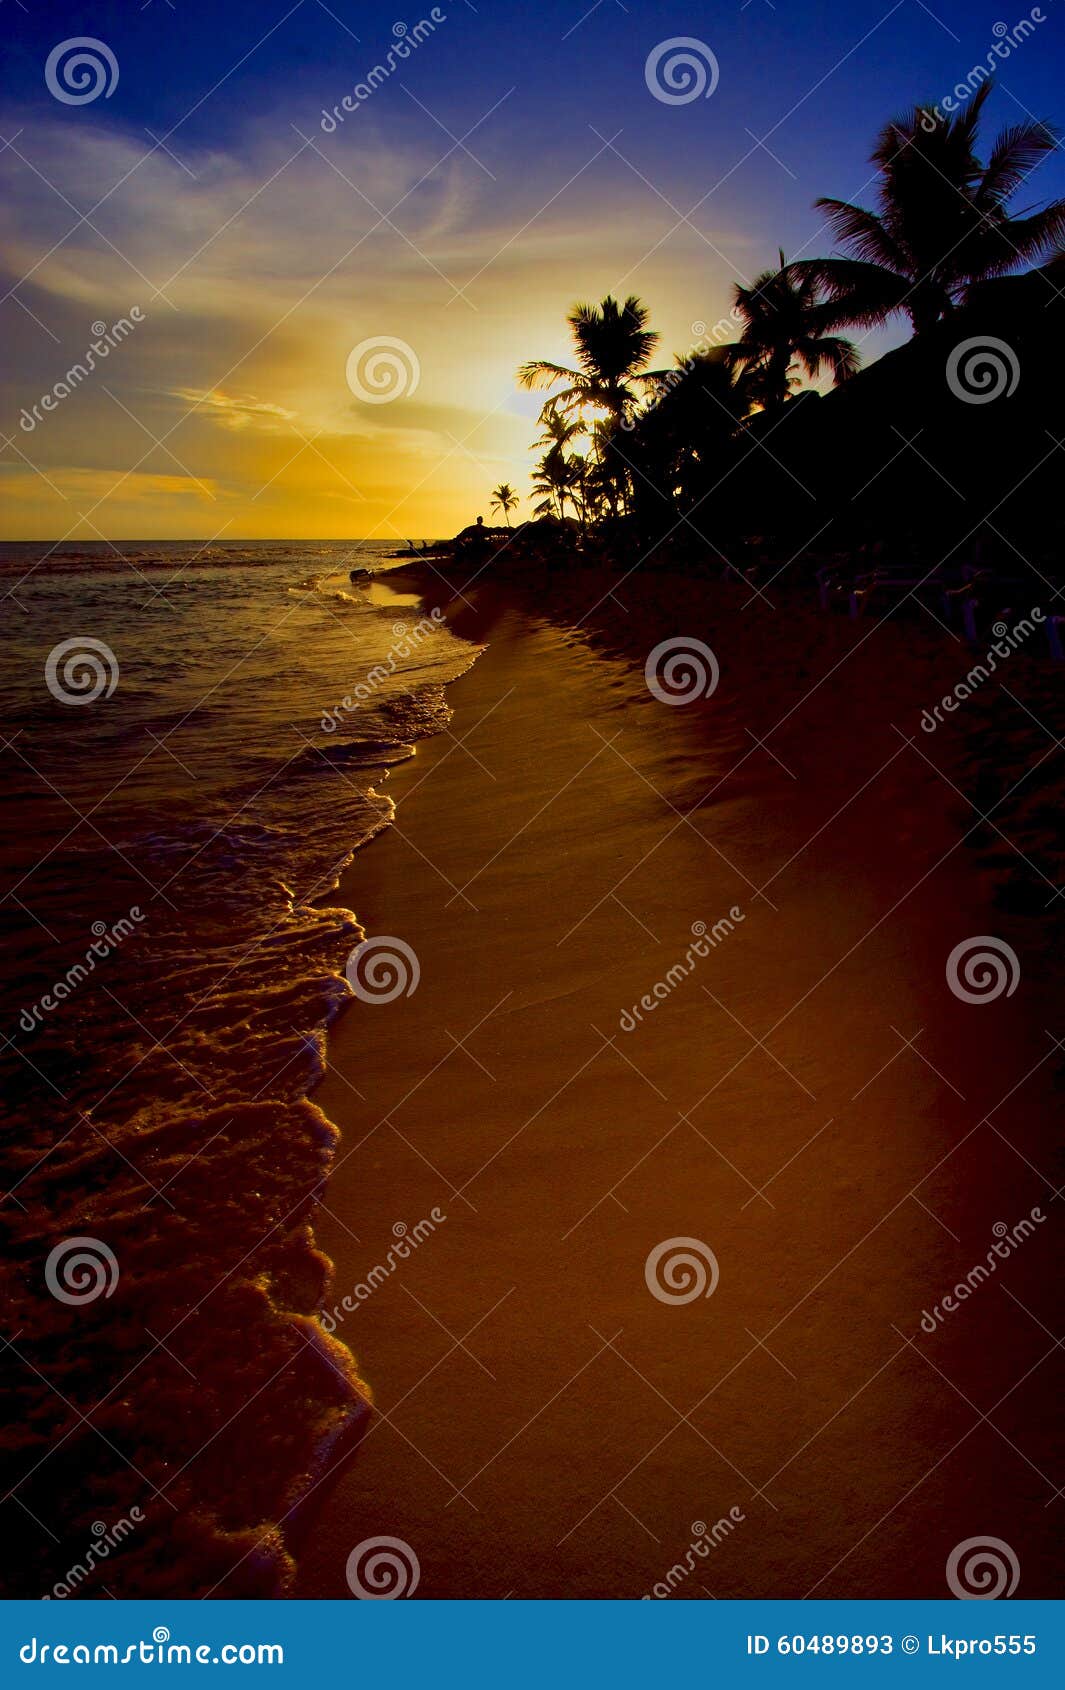 sunrise river palm